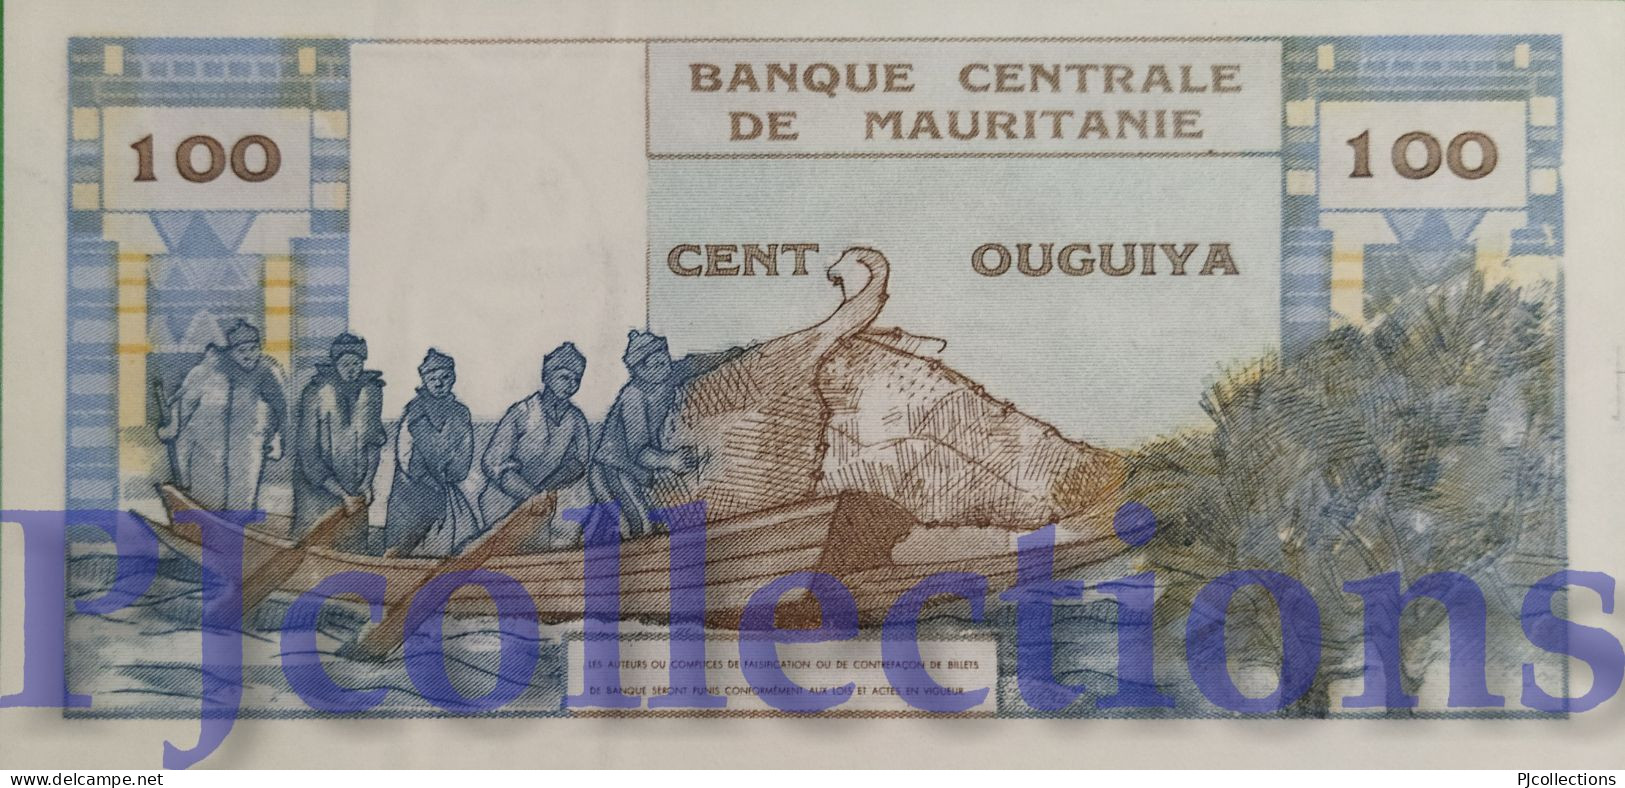 MAURITANIA 100 OUGUIYA 1973 PICK 1a UNC - Mauritania